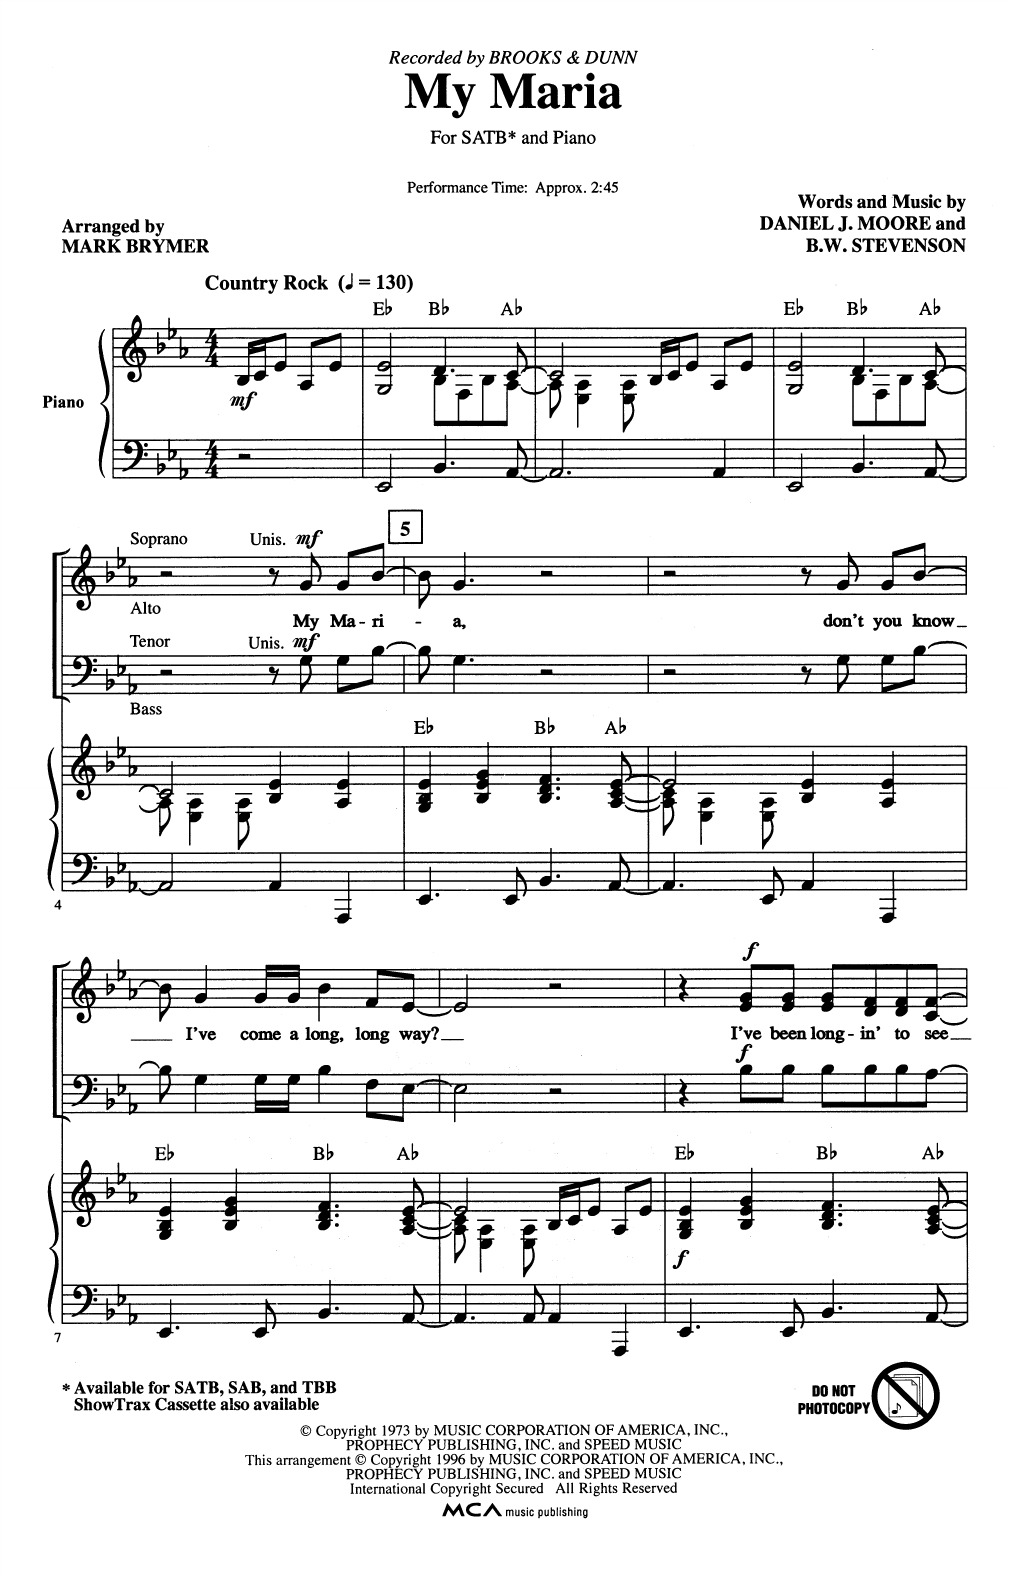 Brooks & Dunn My Maria (arr. Mark Brymer) Sheet Music Notes & Chords for SATB Choir - Download or Print PDF